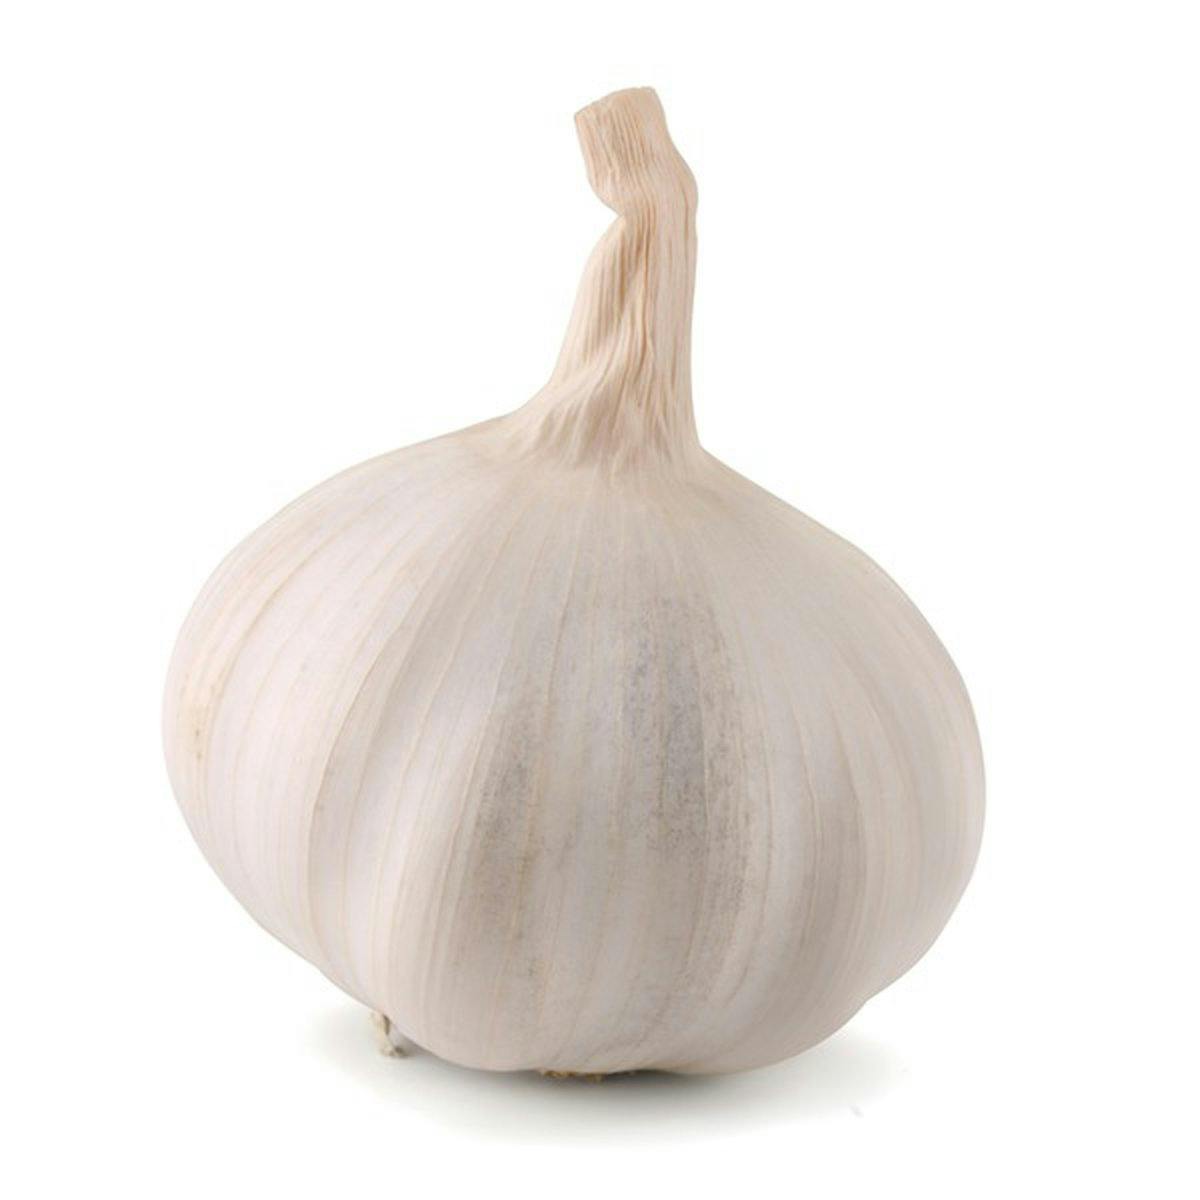 heads of garlic